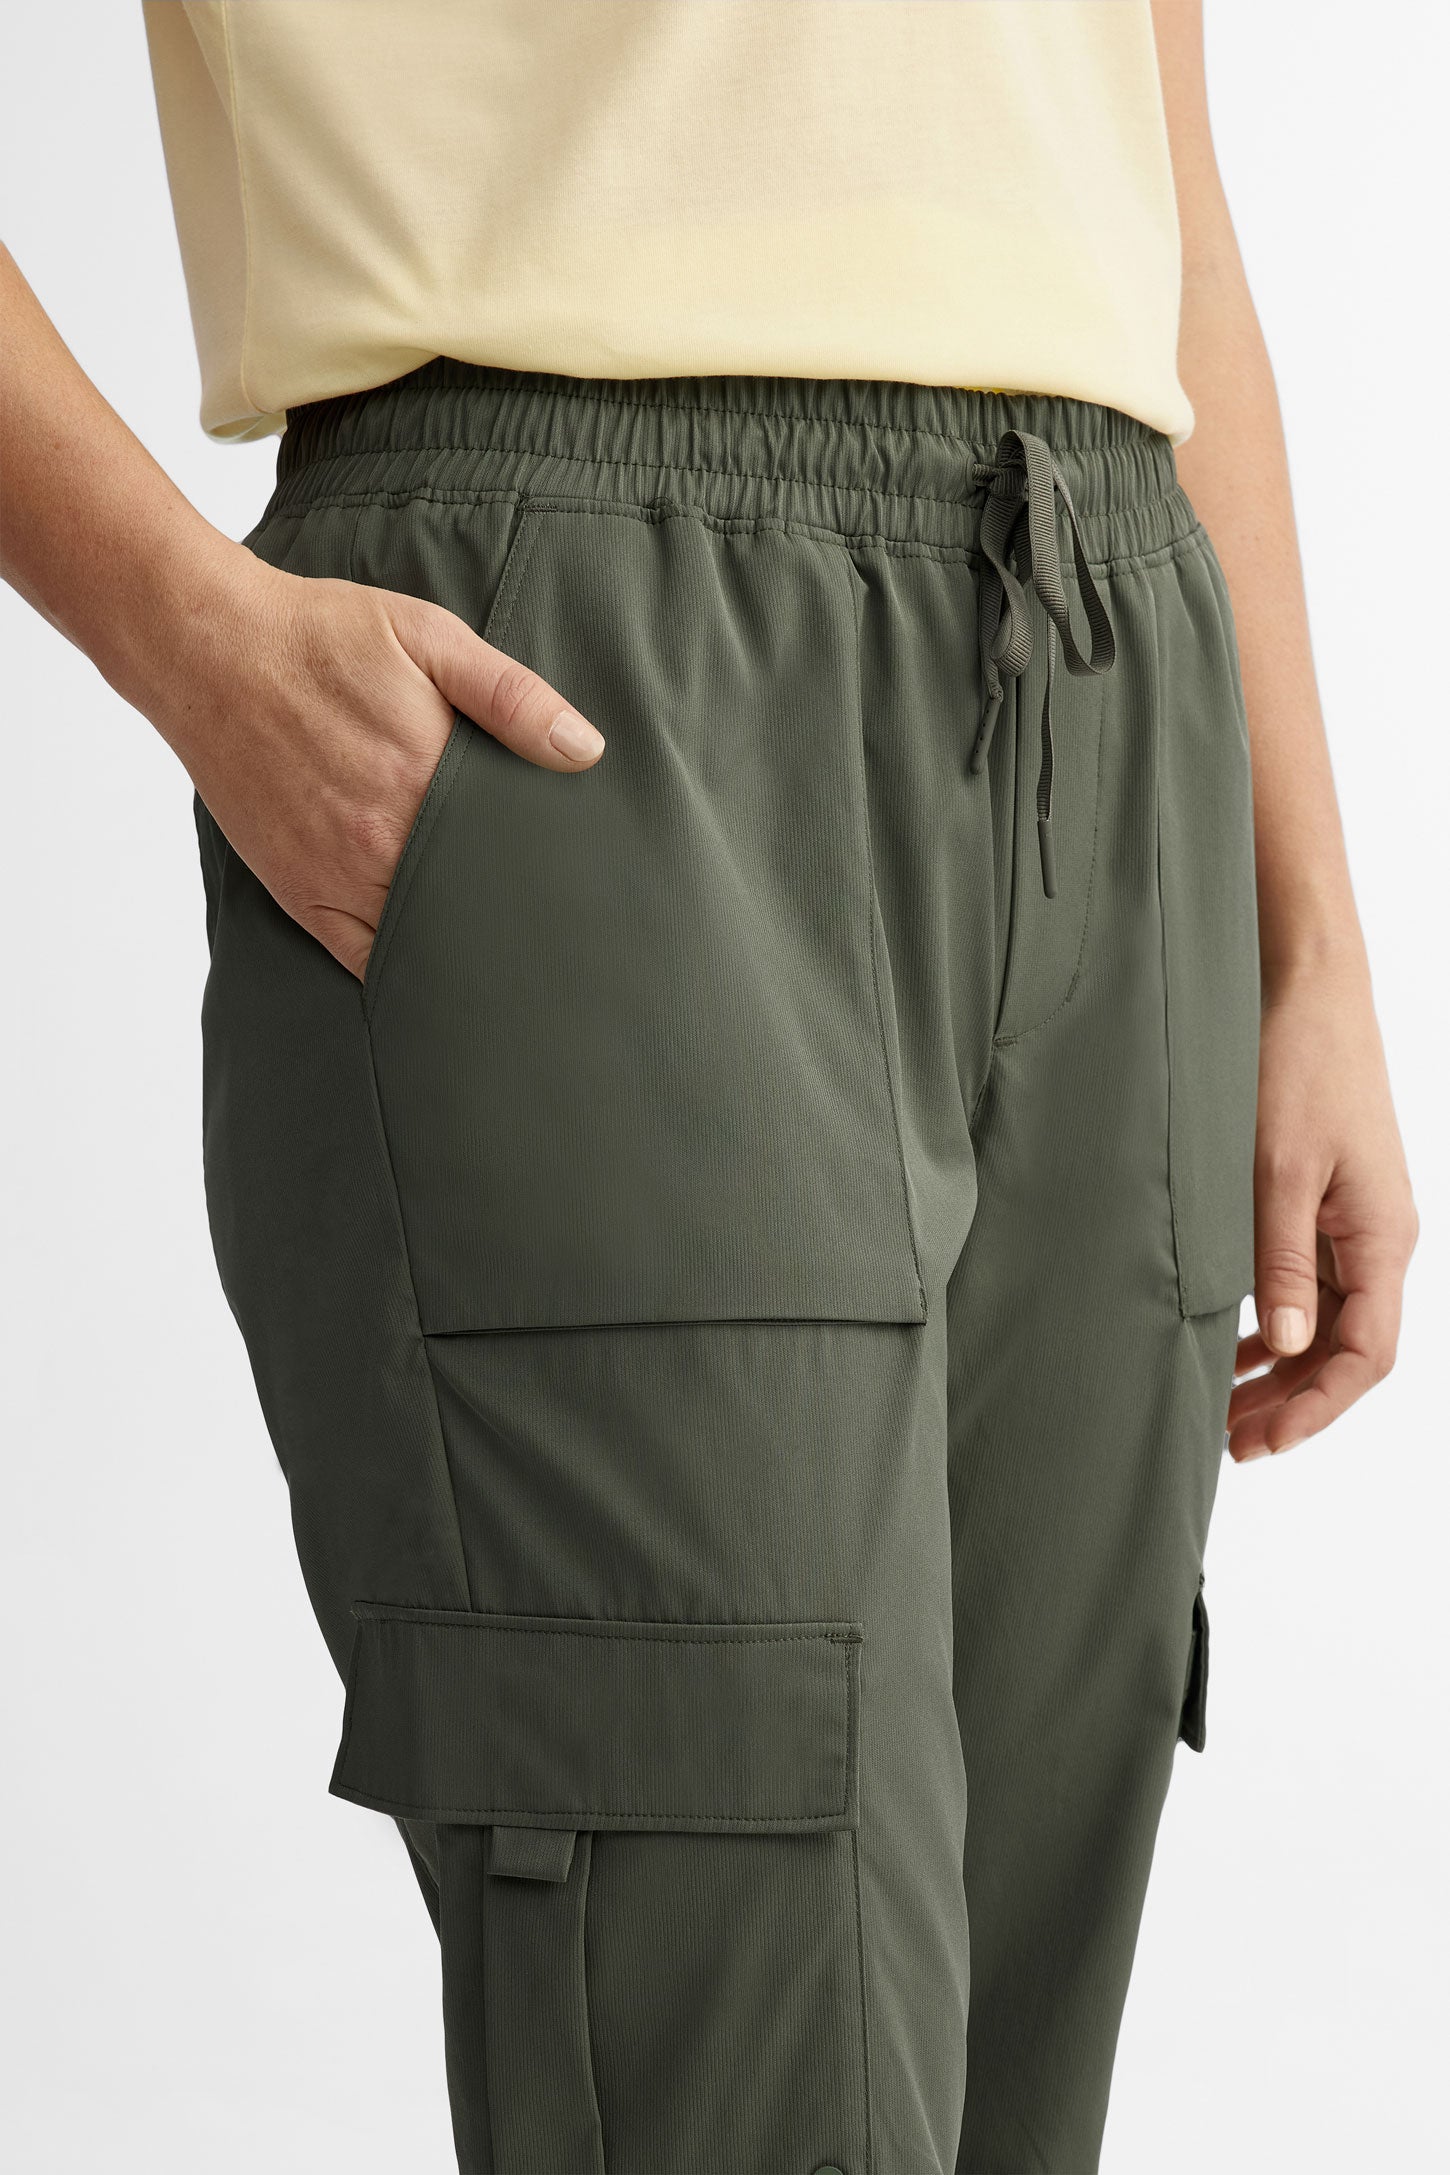 Pantalon cargo taille élastique BM - Femme && KAKI